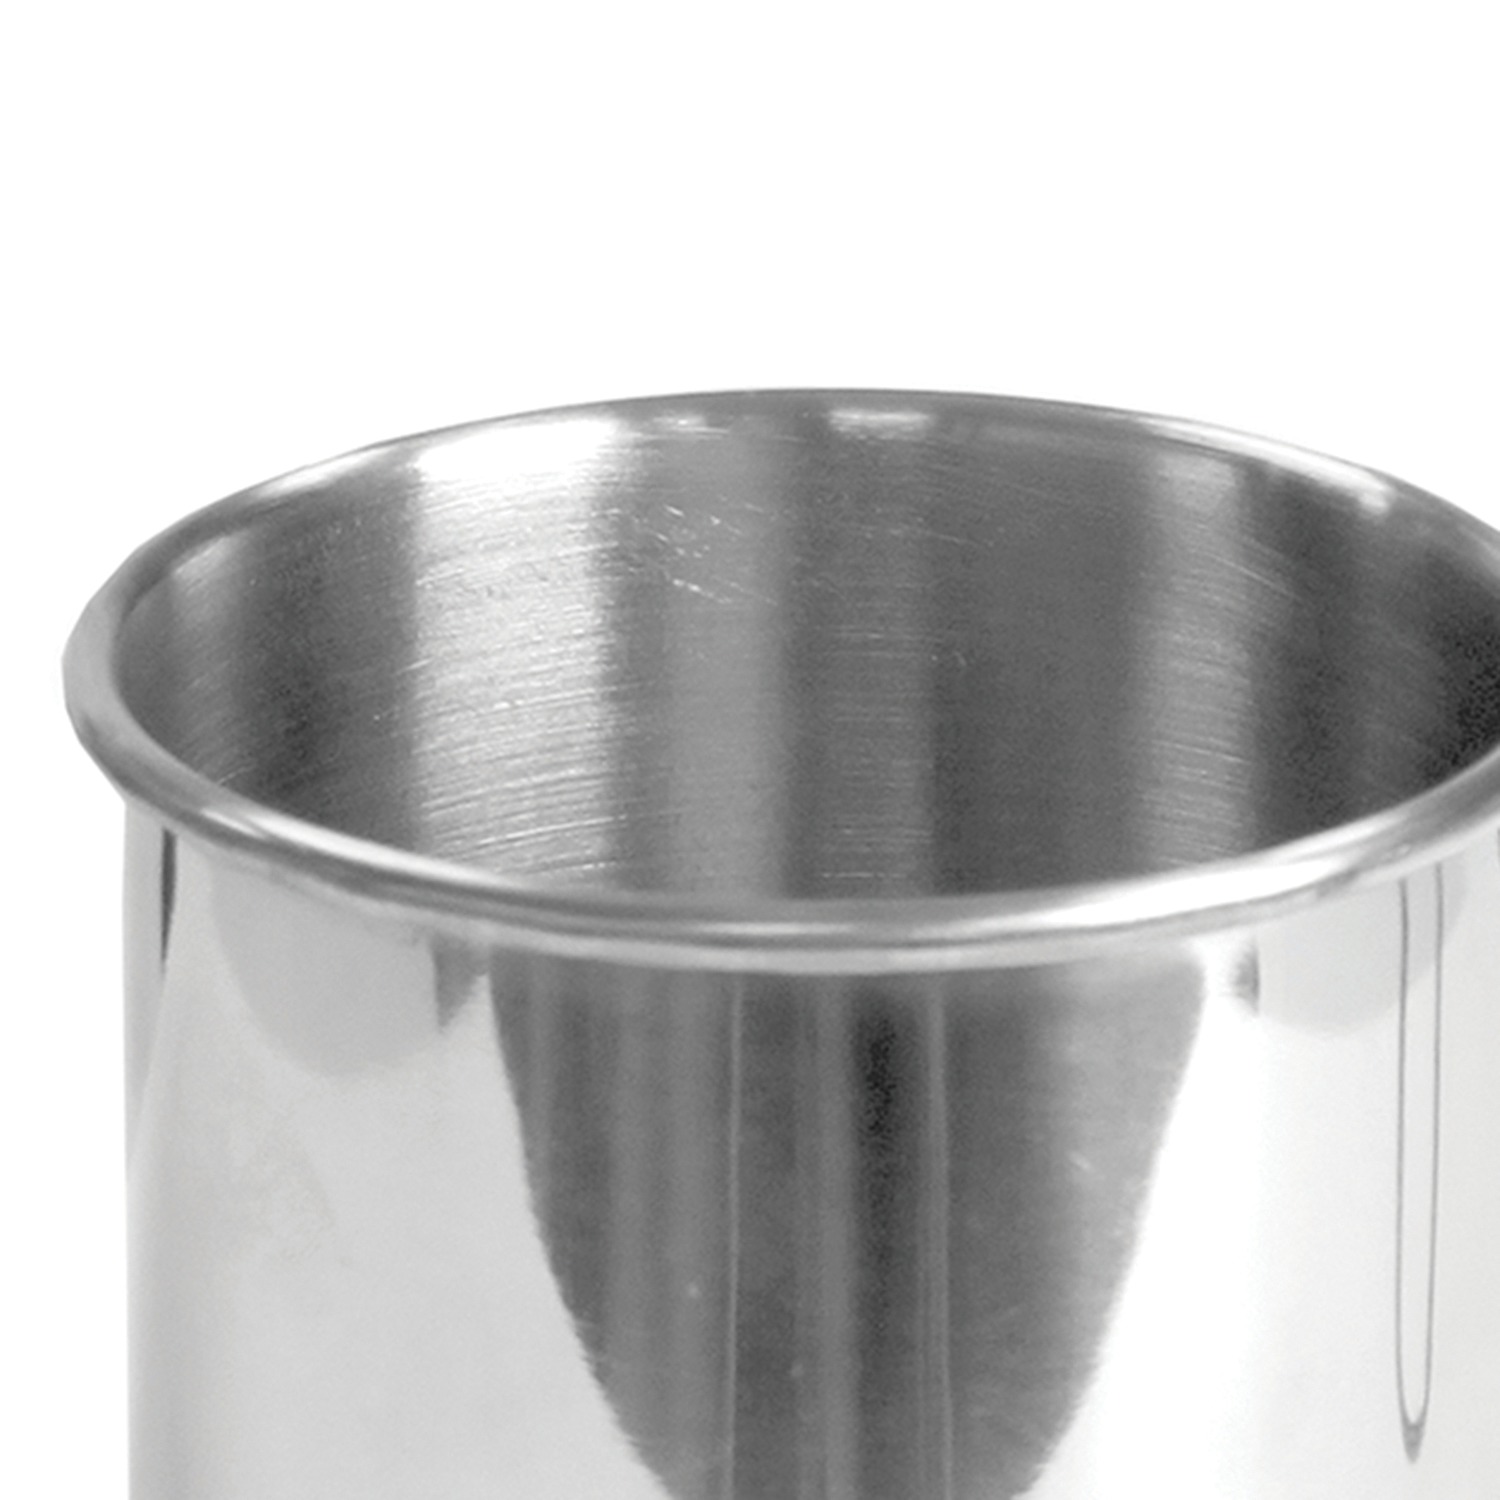 Stansport Stainless Steel Mug - 17 Fluid oz - Klondike Camping Coffee Cup - image 3 of 3